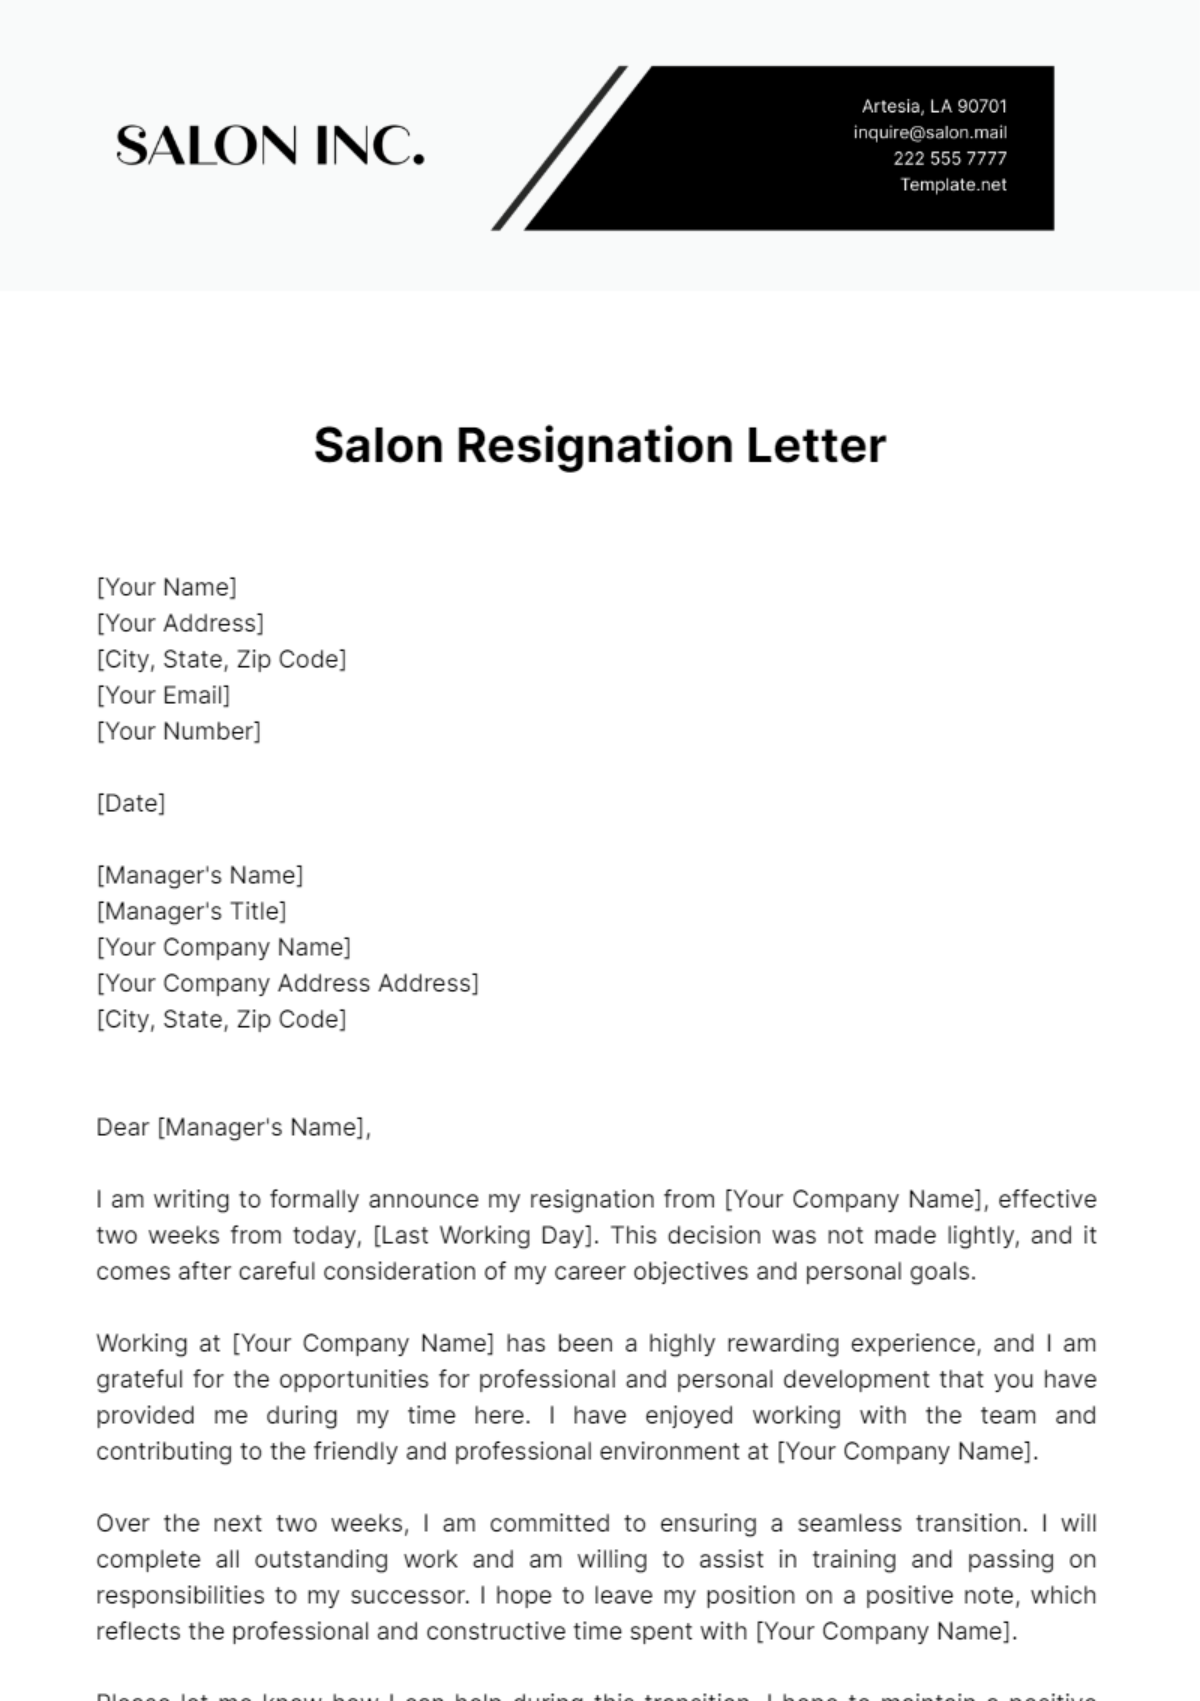 Free Salon Resignation Letter Template